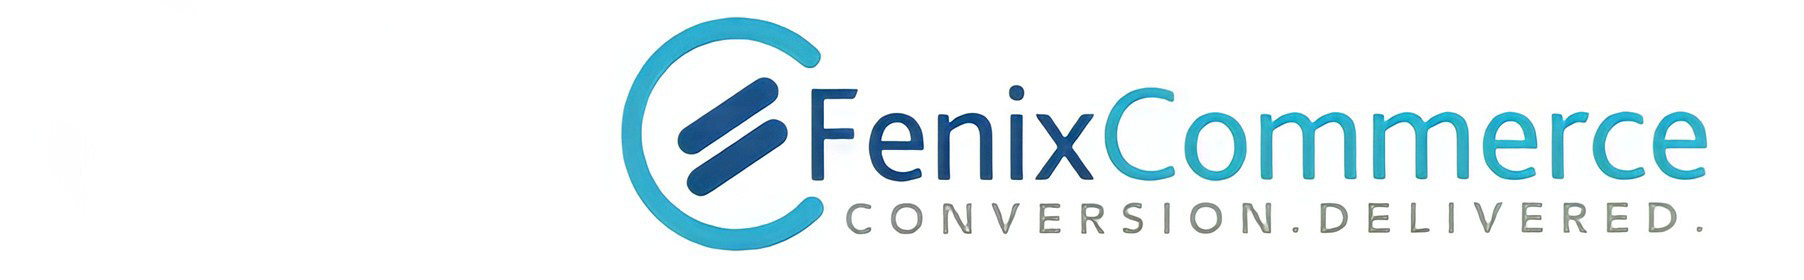 Fenix Commerce's profile banner